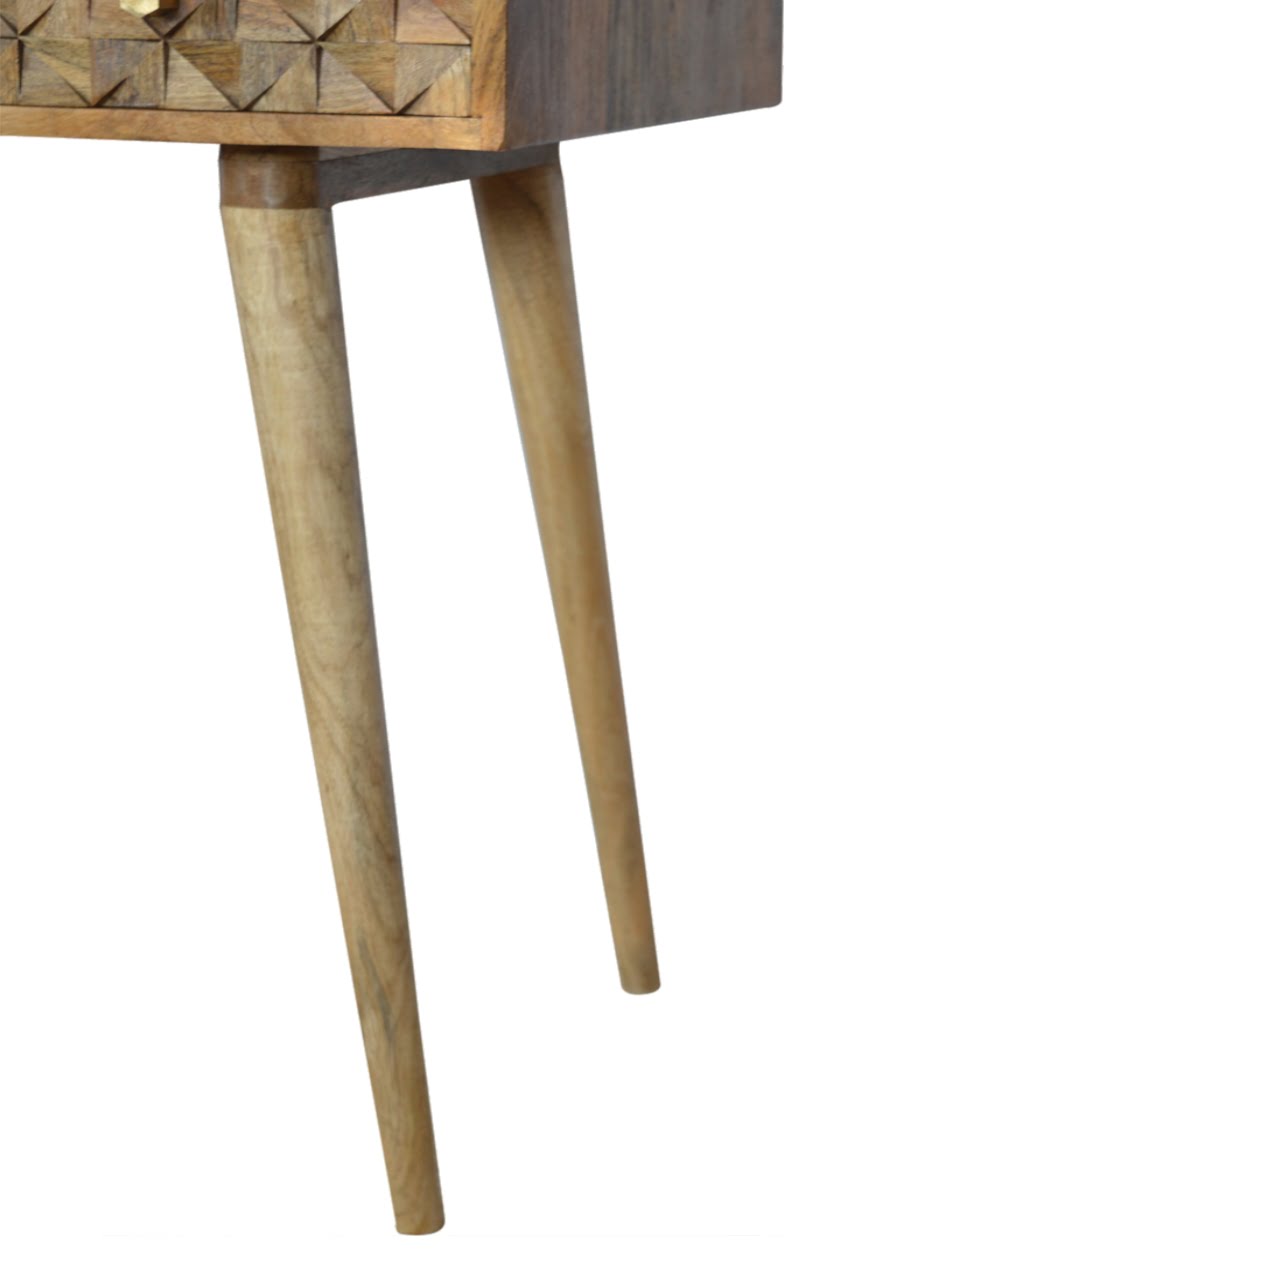 KENYON Handmade Solid Wood Study Desk with Carved Drawer Frontal | malletandplane.com